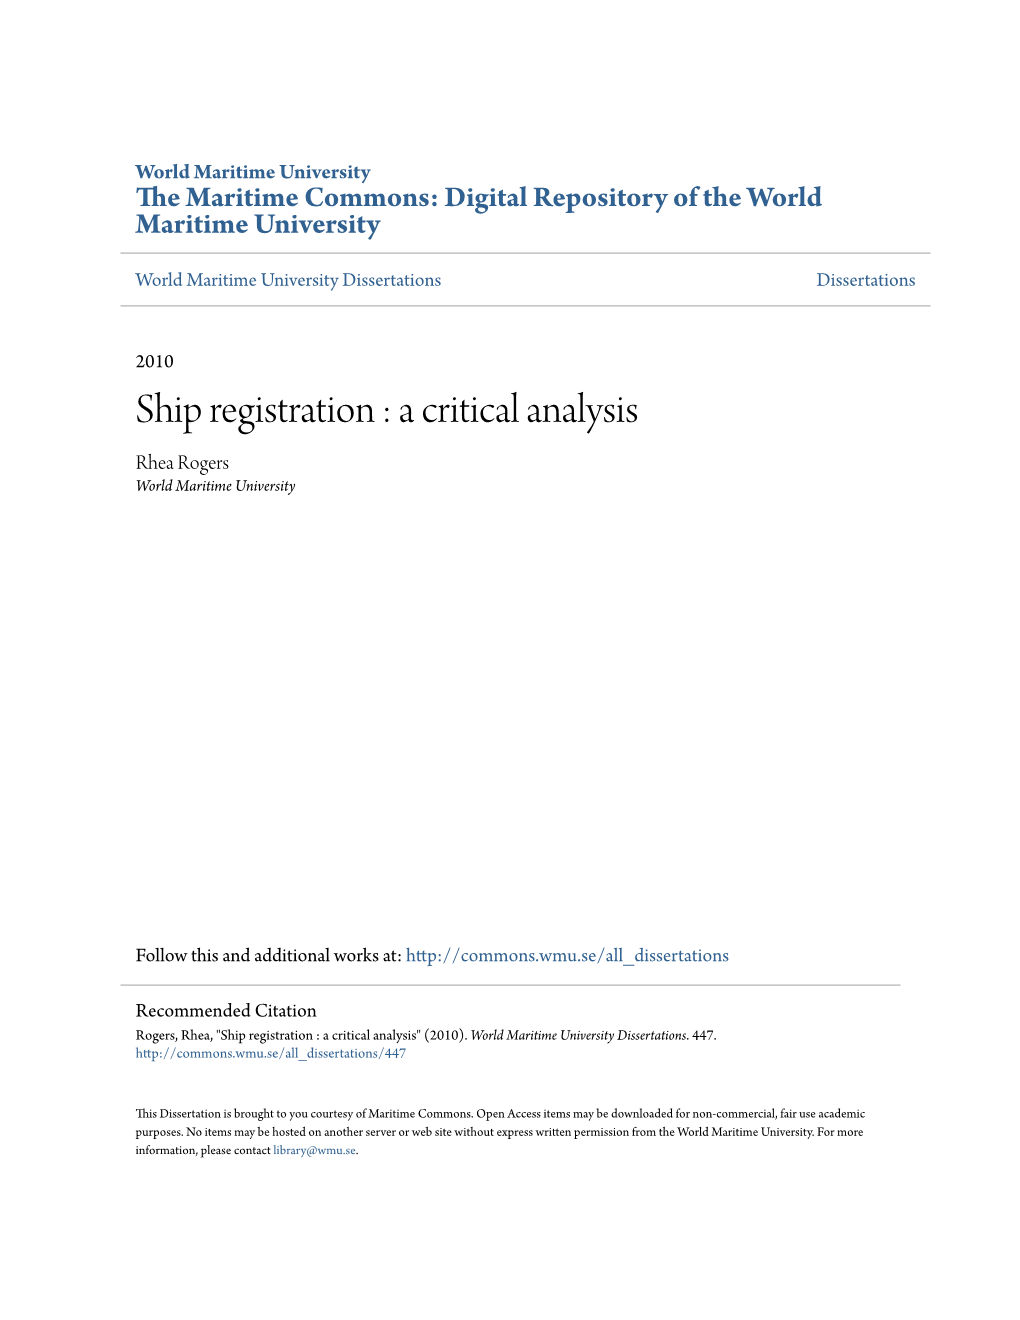 Ship Registration : a Critical Analysis Rhea Rogers World Maritime University